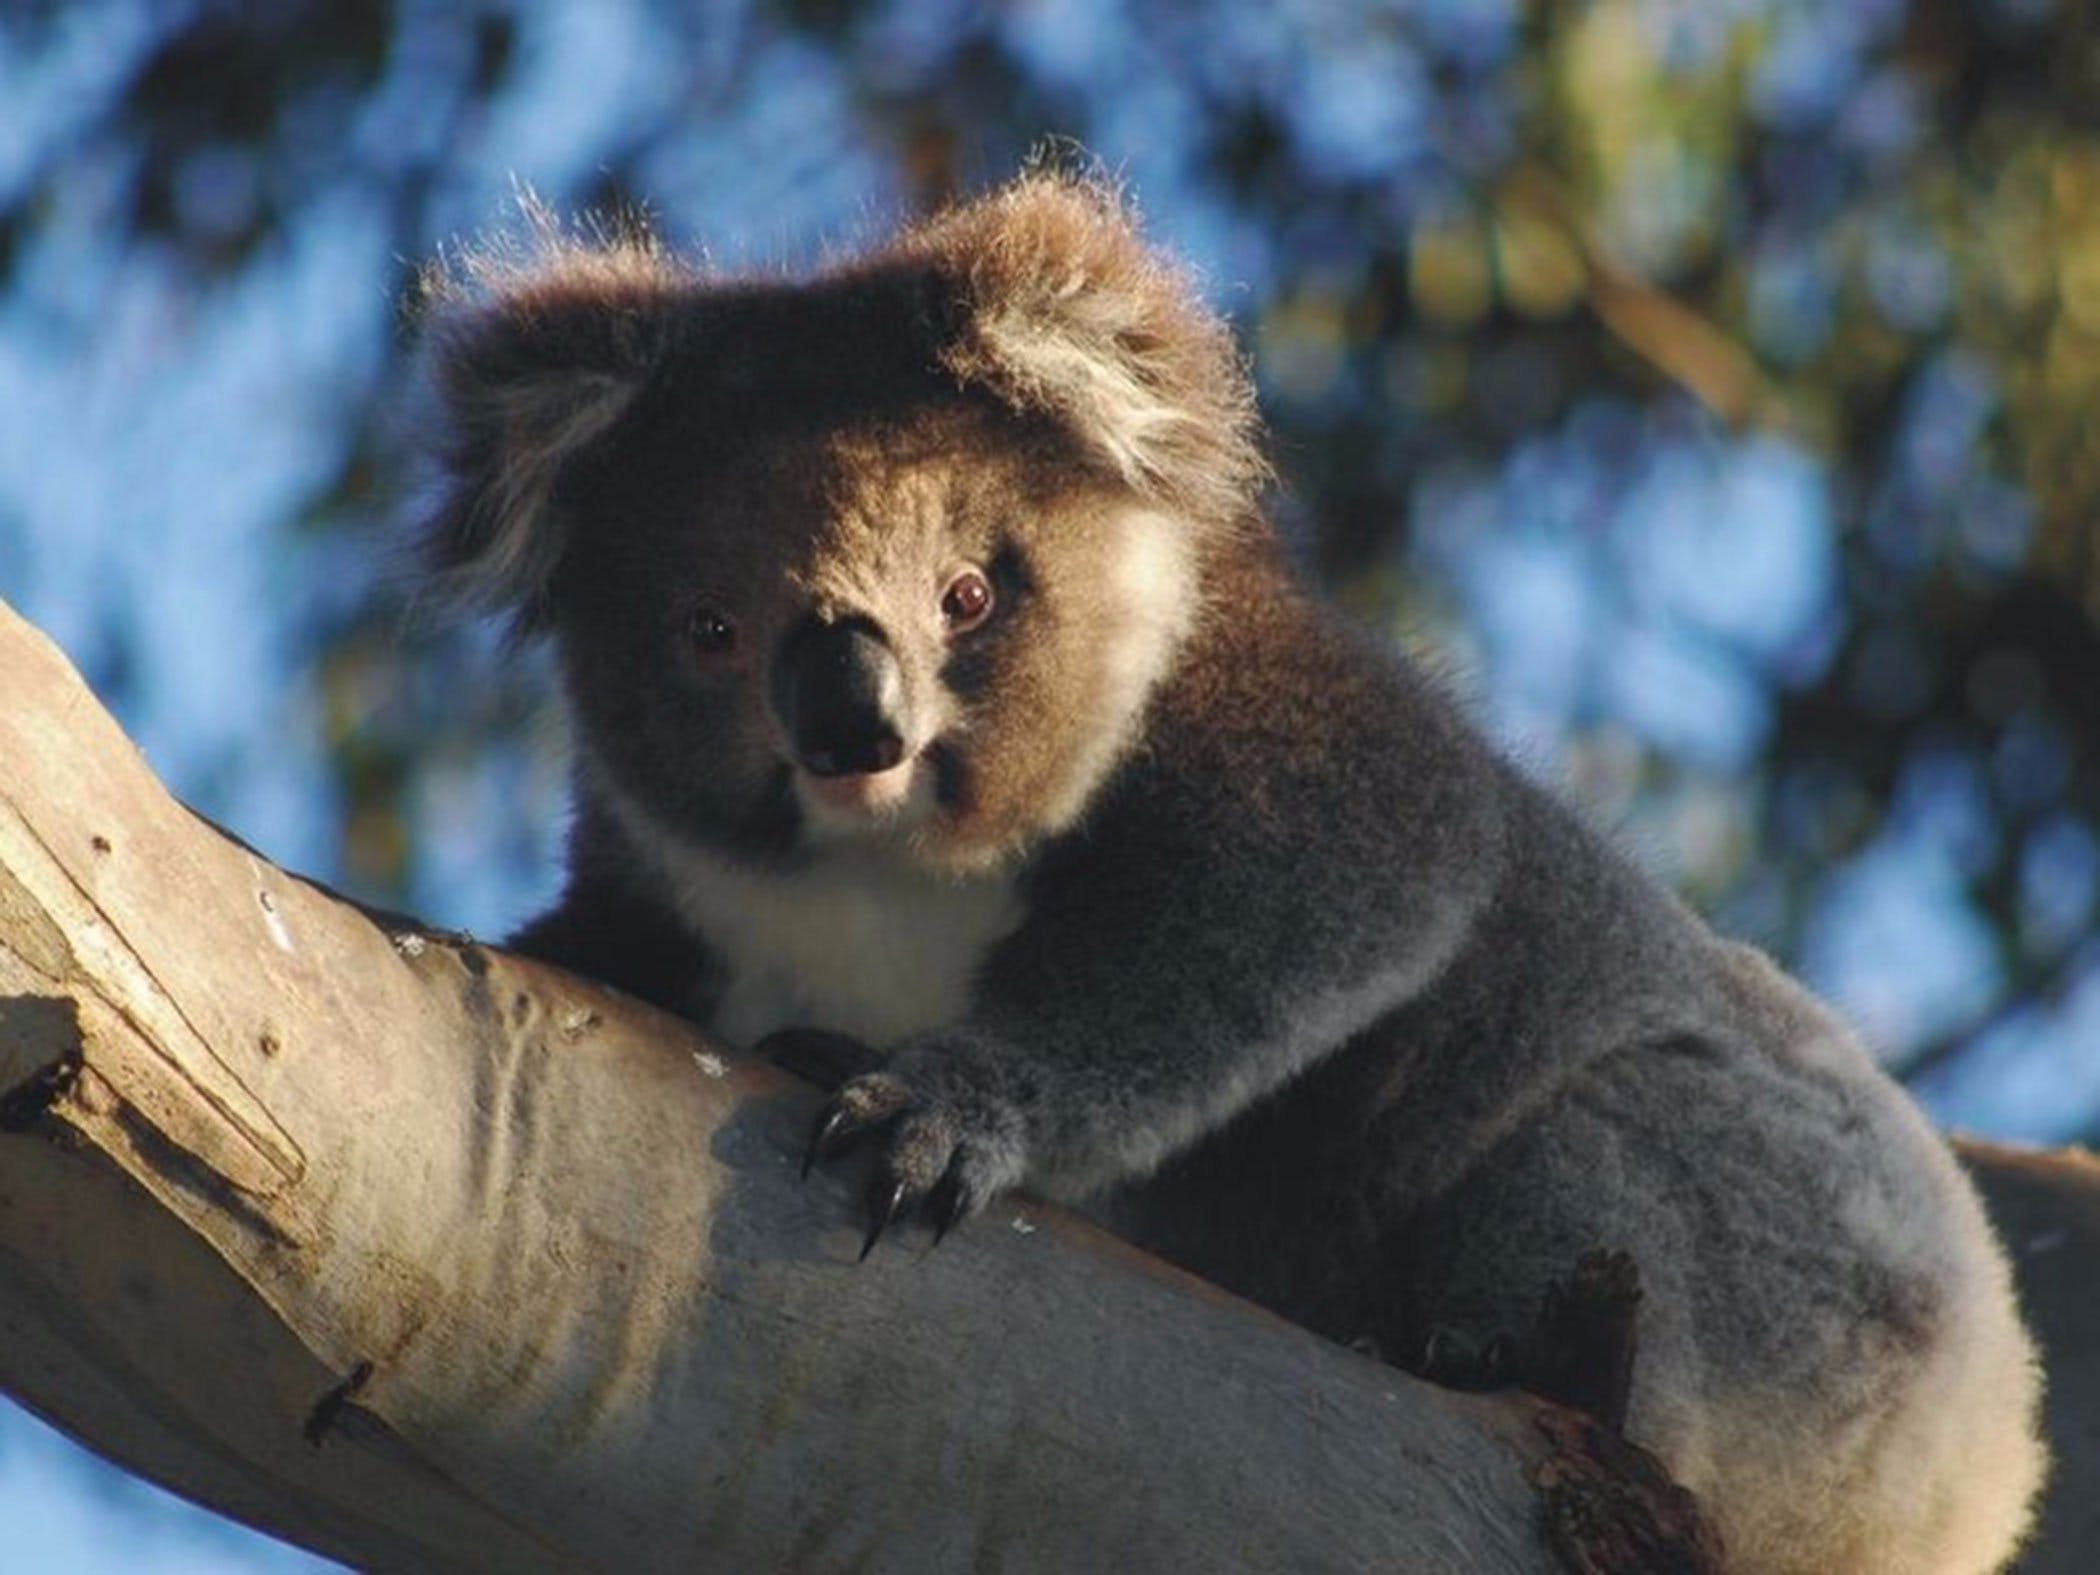 Bimbi Park Camping Under Koalas - Lennox Head Accommodation